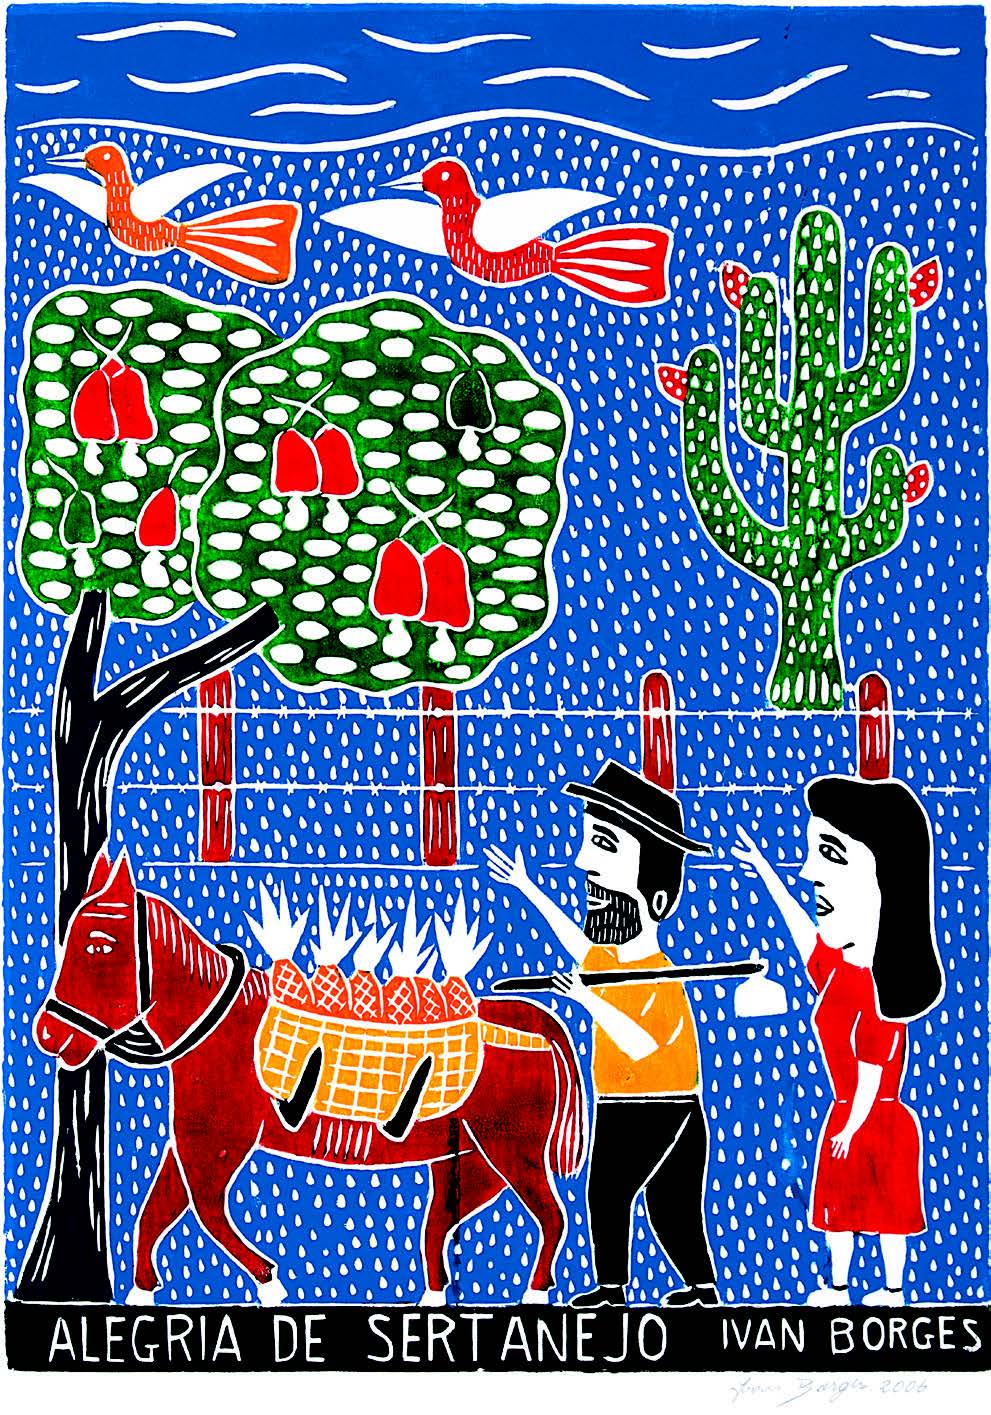 Ivan Borges, Alegria de Sertanejo (Joy of the Country Farmer), 2006. Woodcut print. Collection MOIFA, Gift of the Tesoros Trading Company (A.2013.32.6).